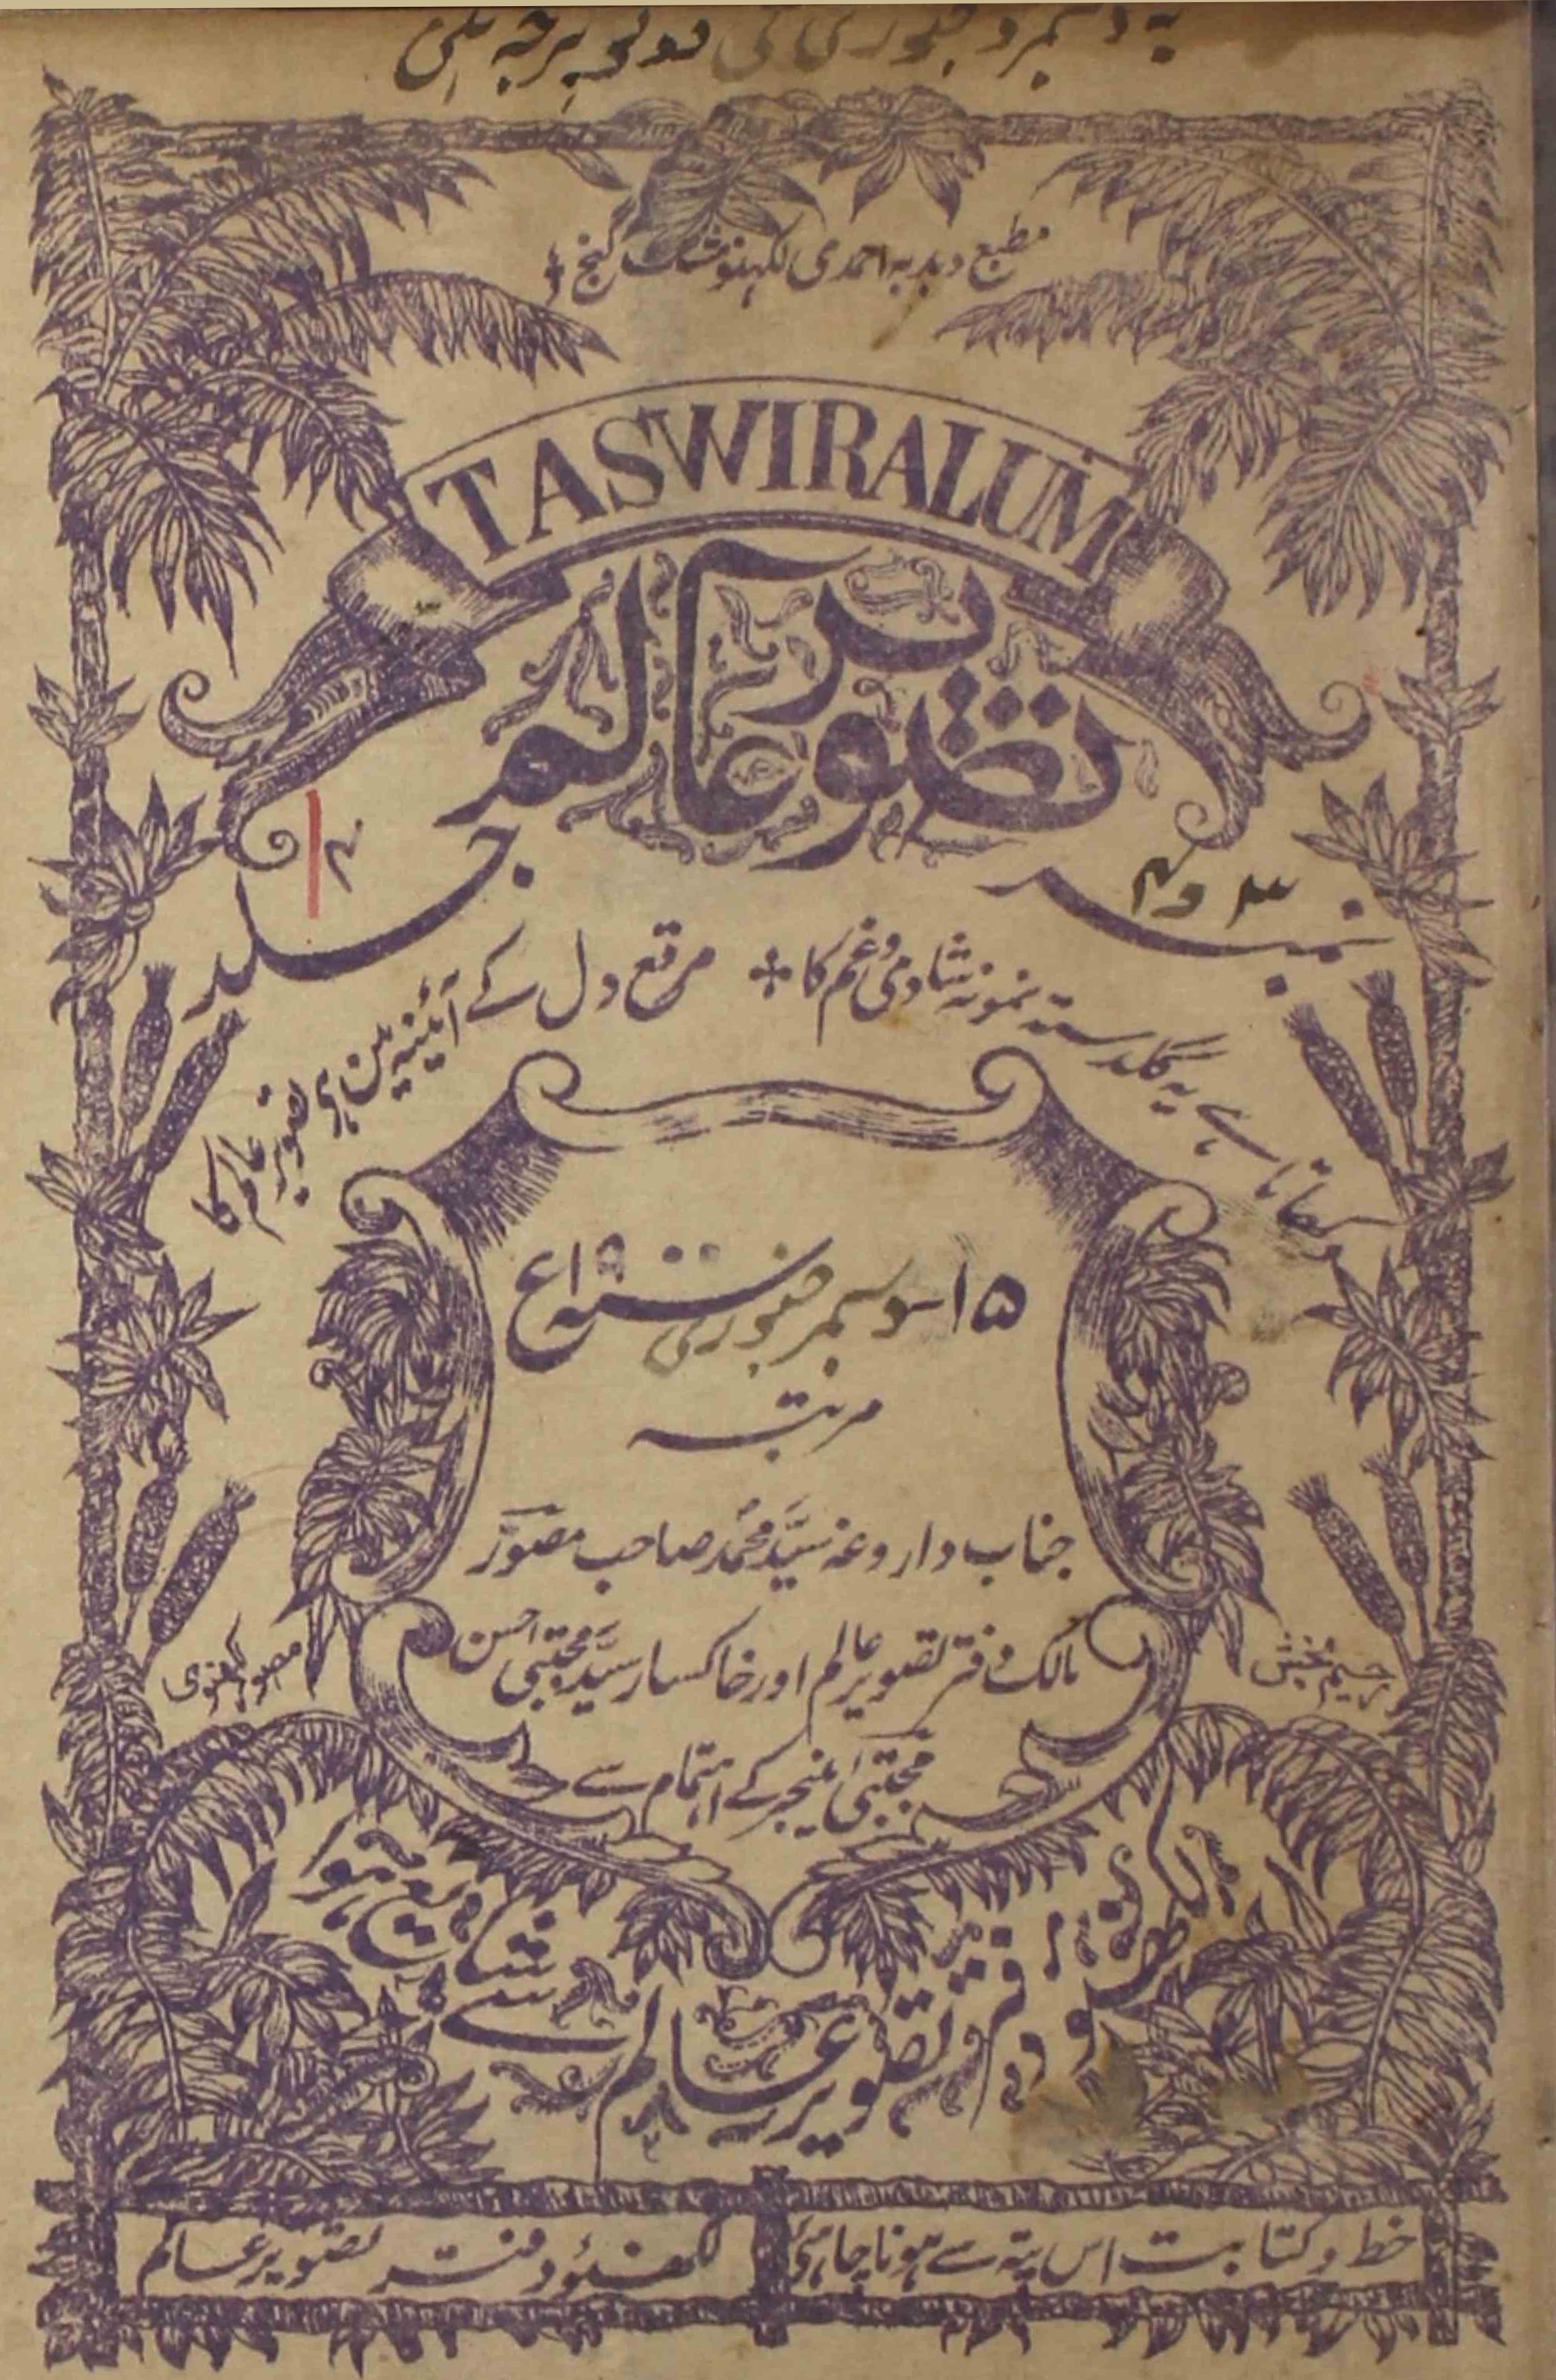 tasweer-e-alam-shumara-number-003-004-darogha-syed-mohammad-magazines